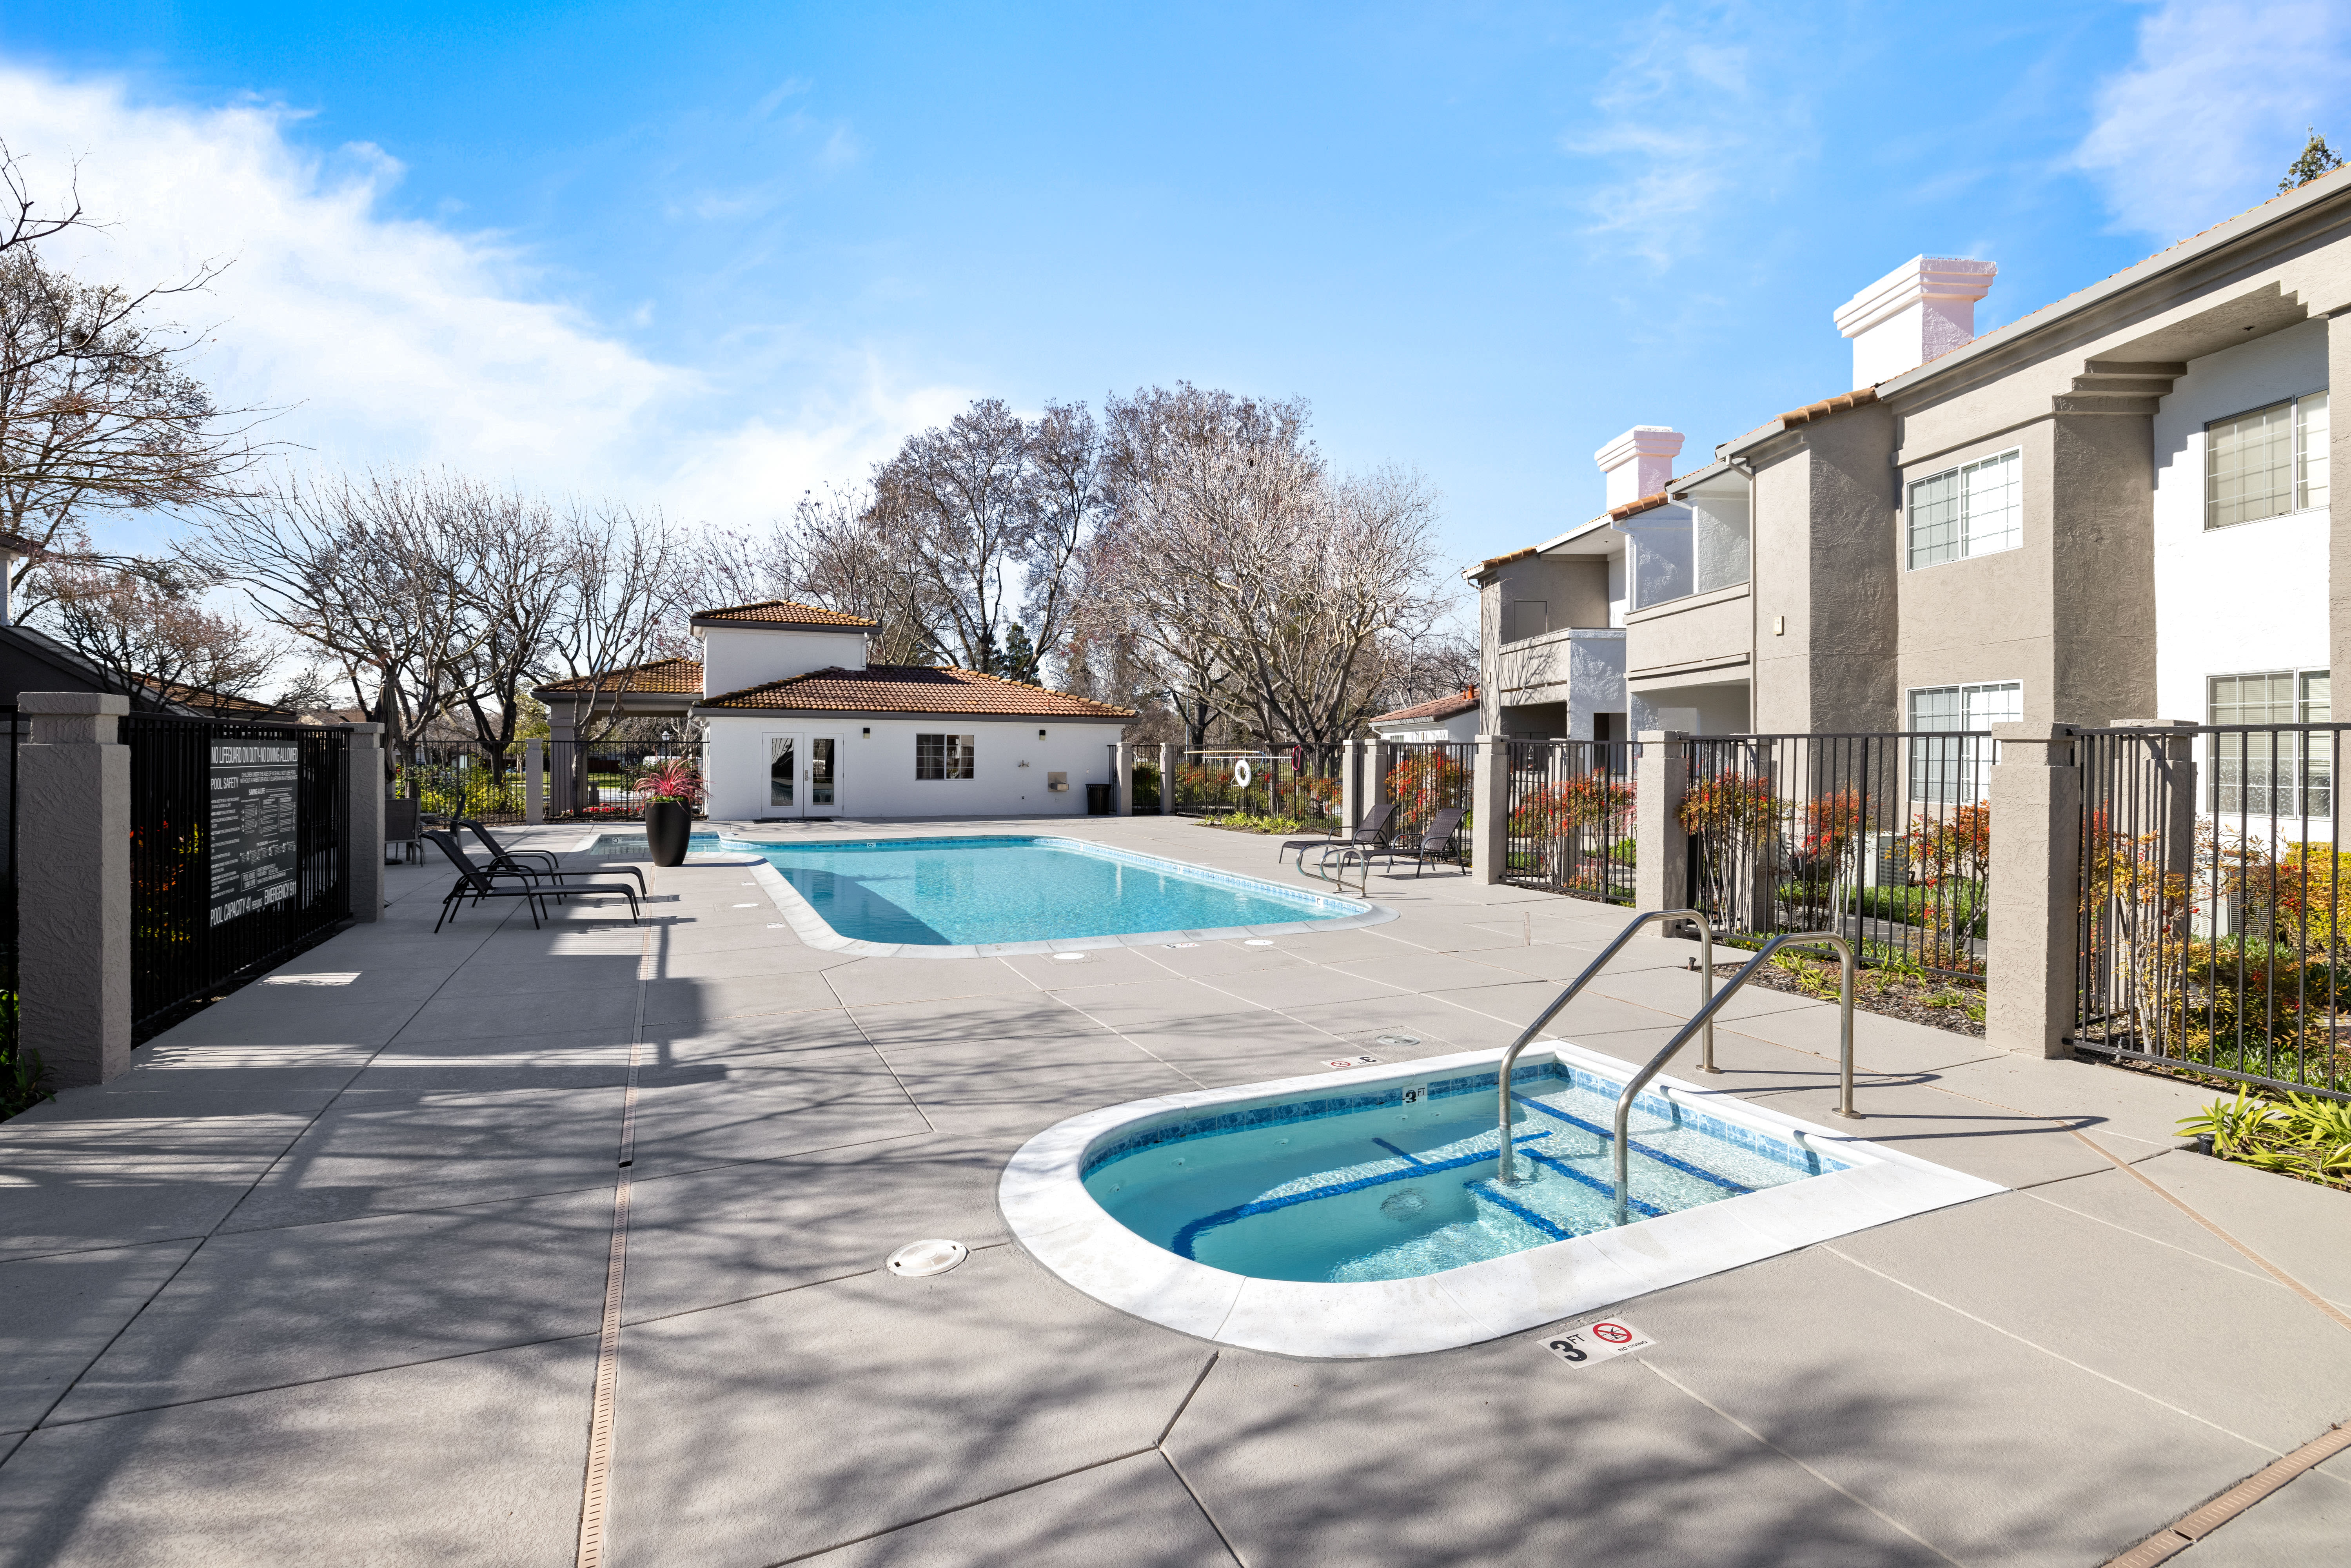 Pool at Terra at Portola Park apartments in Livermore, California